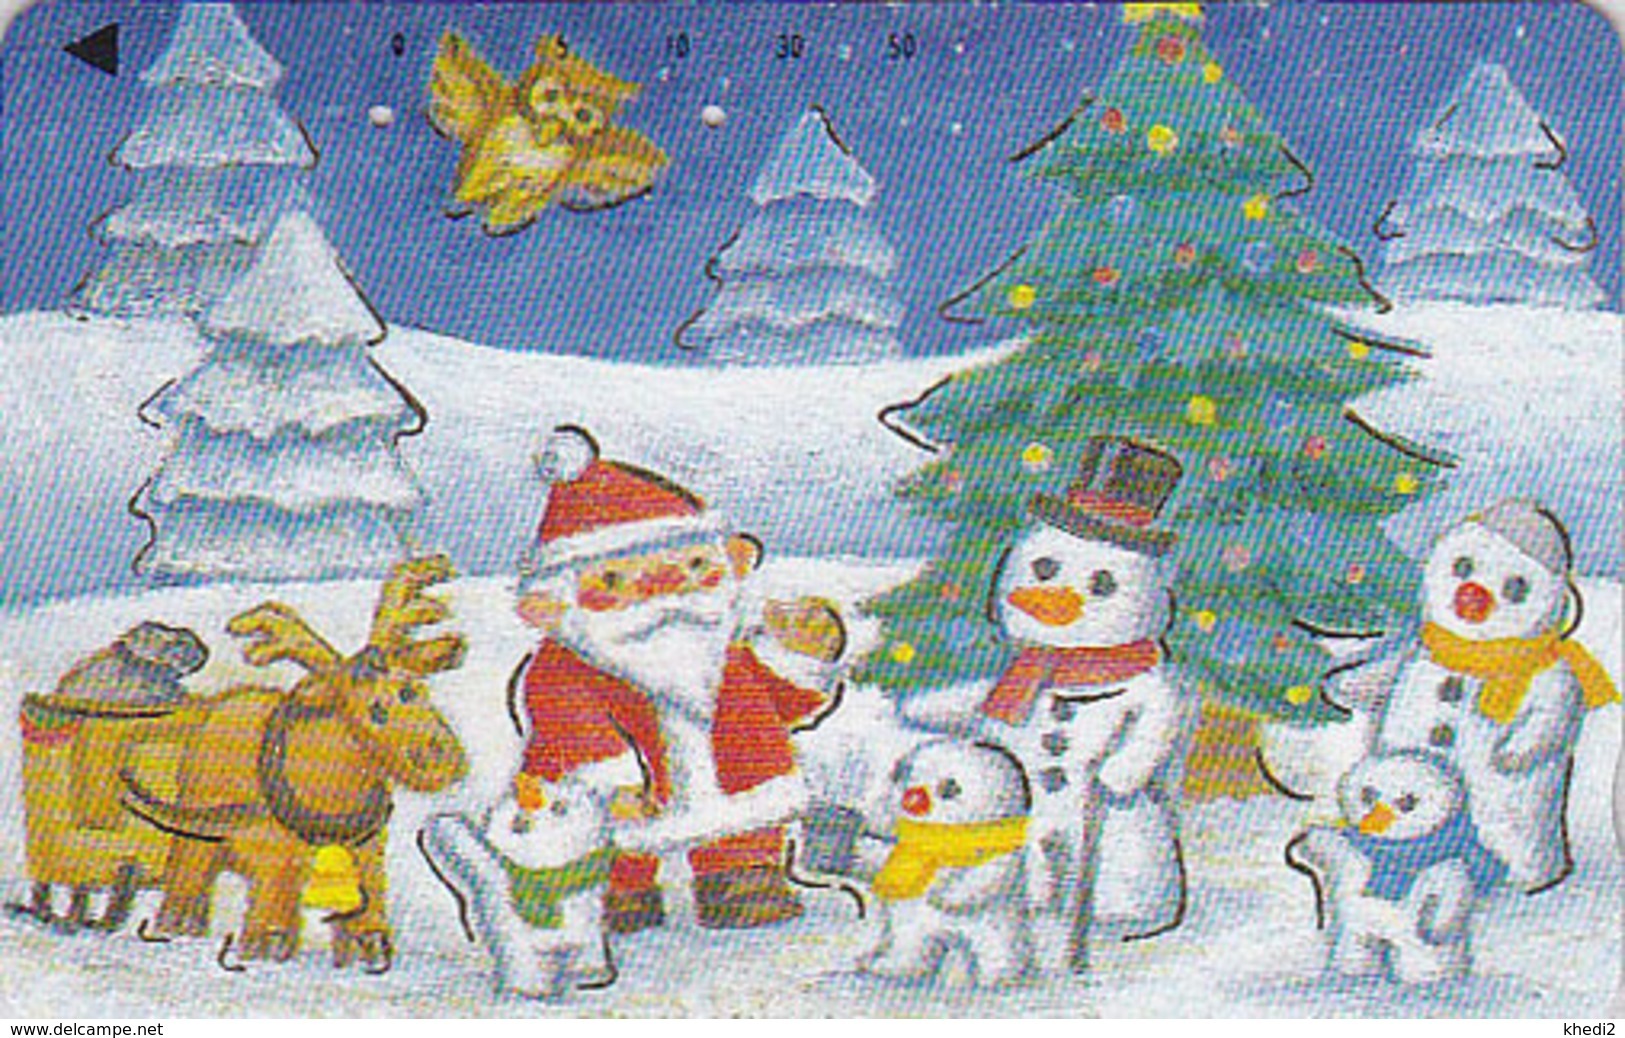 Télécarte Dorée Japon / 110-011  - HIBOU NOEL Bonhomme De Neige - OWL Bird CHRISTMAS Santa Japan Gold Phonecard - 2068 - Owls